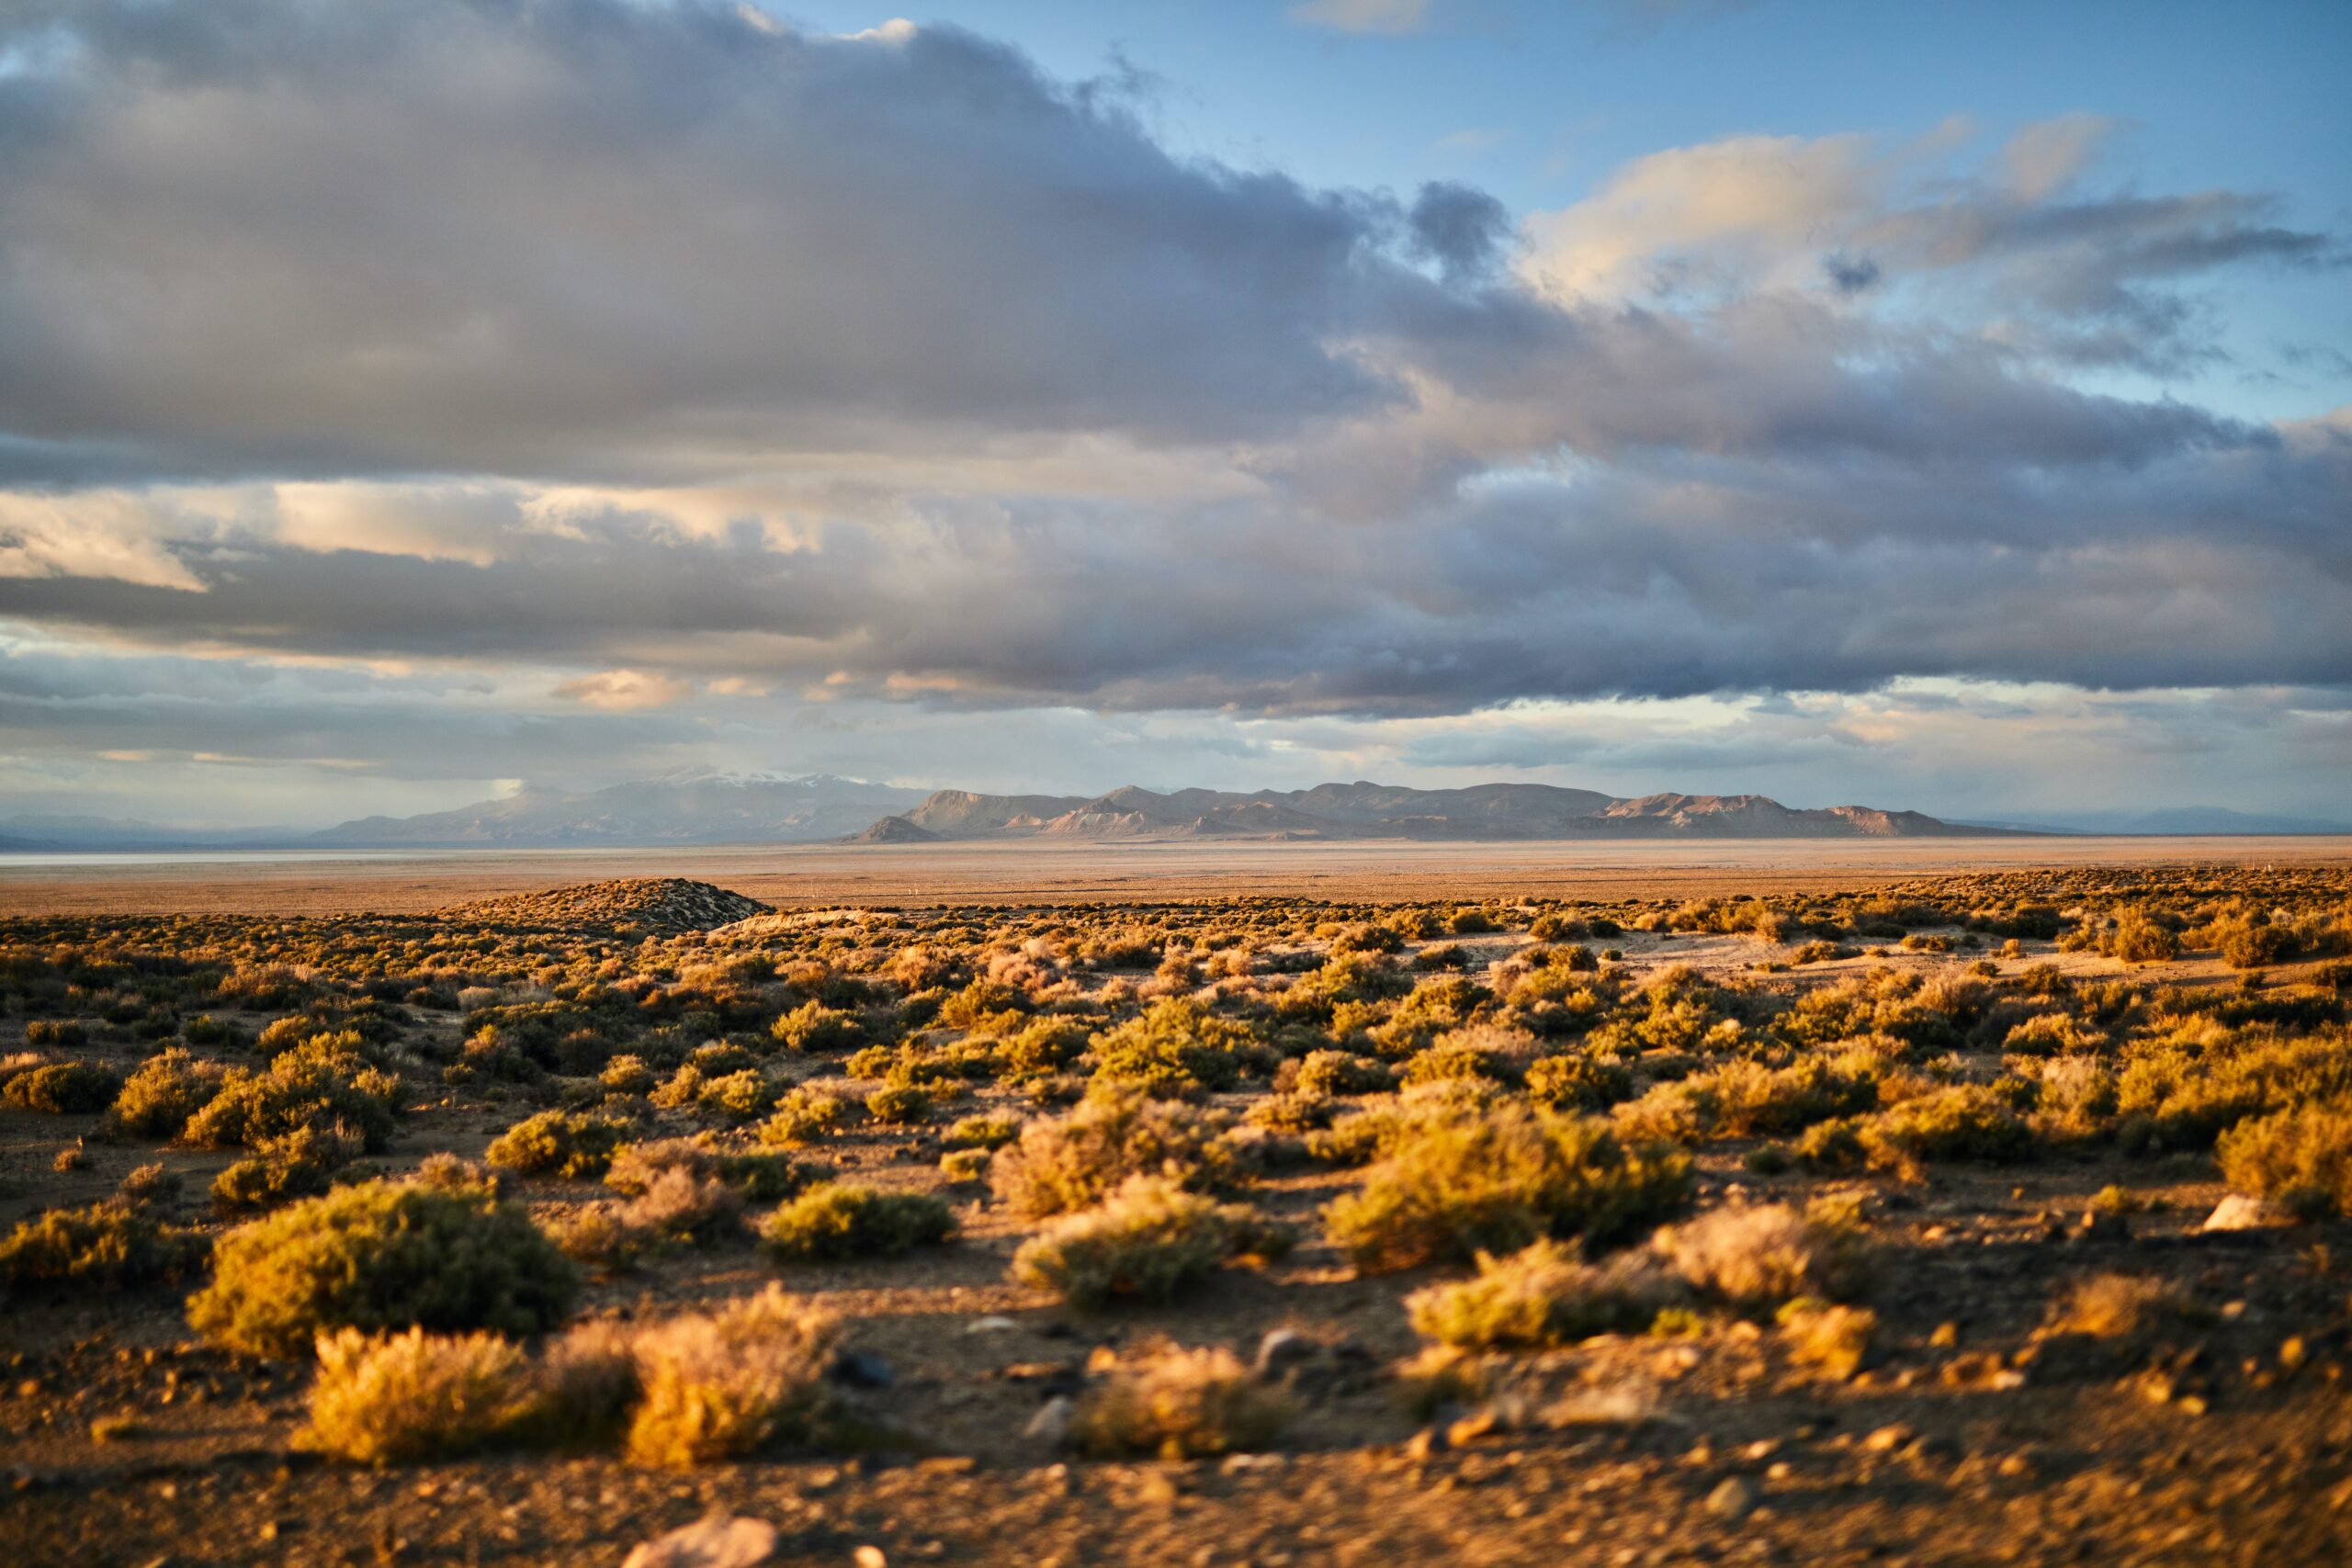 Black Rock Desert – High Rock Canyon Emigrant Trails National Conservation Area